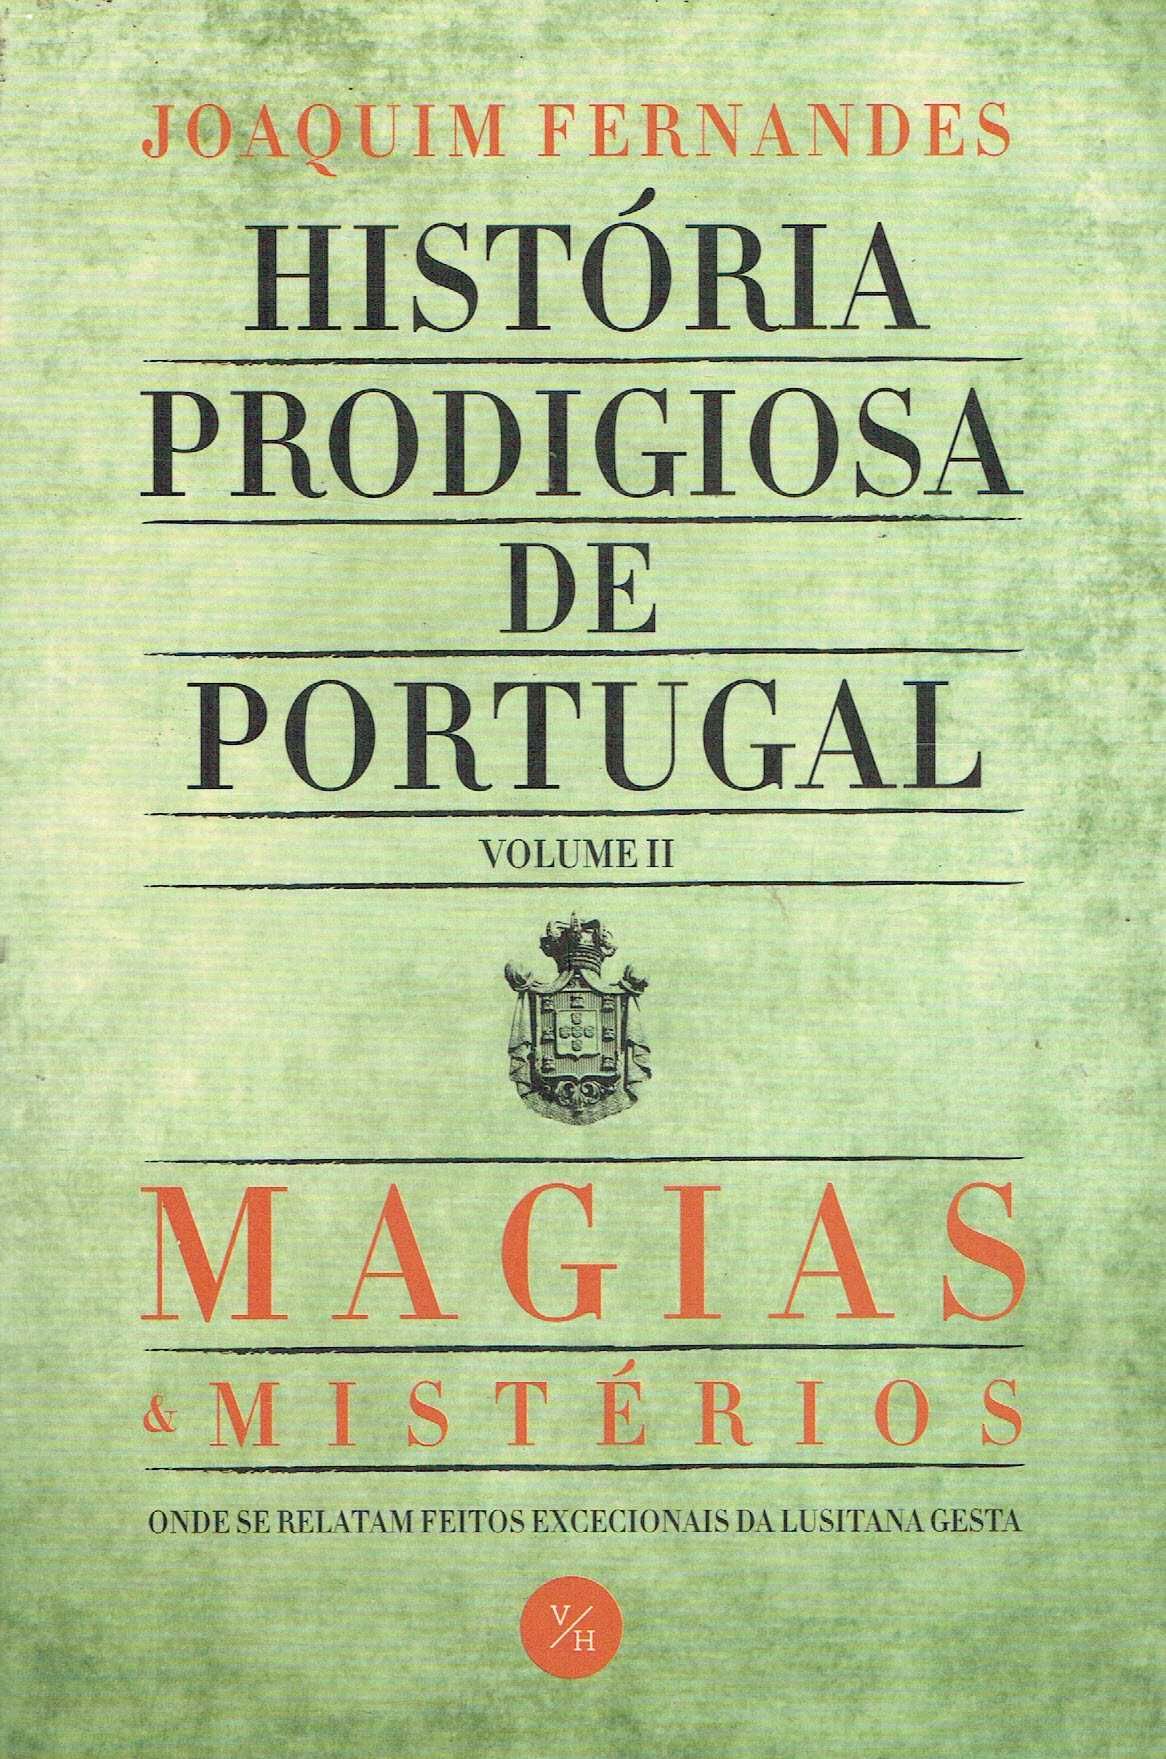 15448
História Prodigiosa de Portugal - Vol II
de Joaquim Fernandes